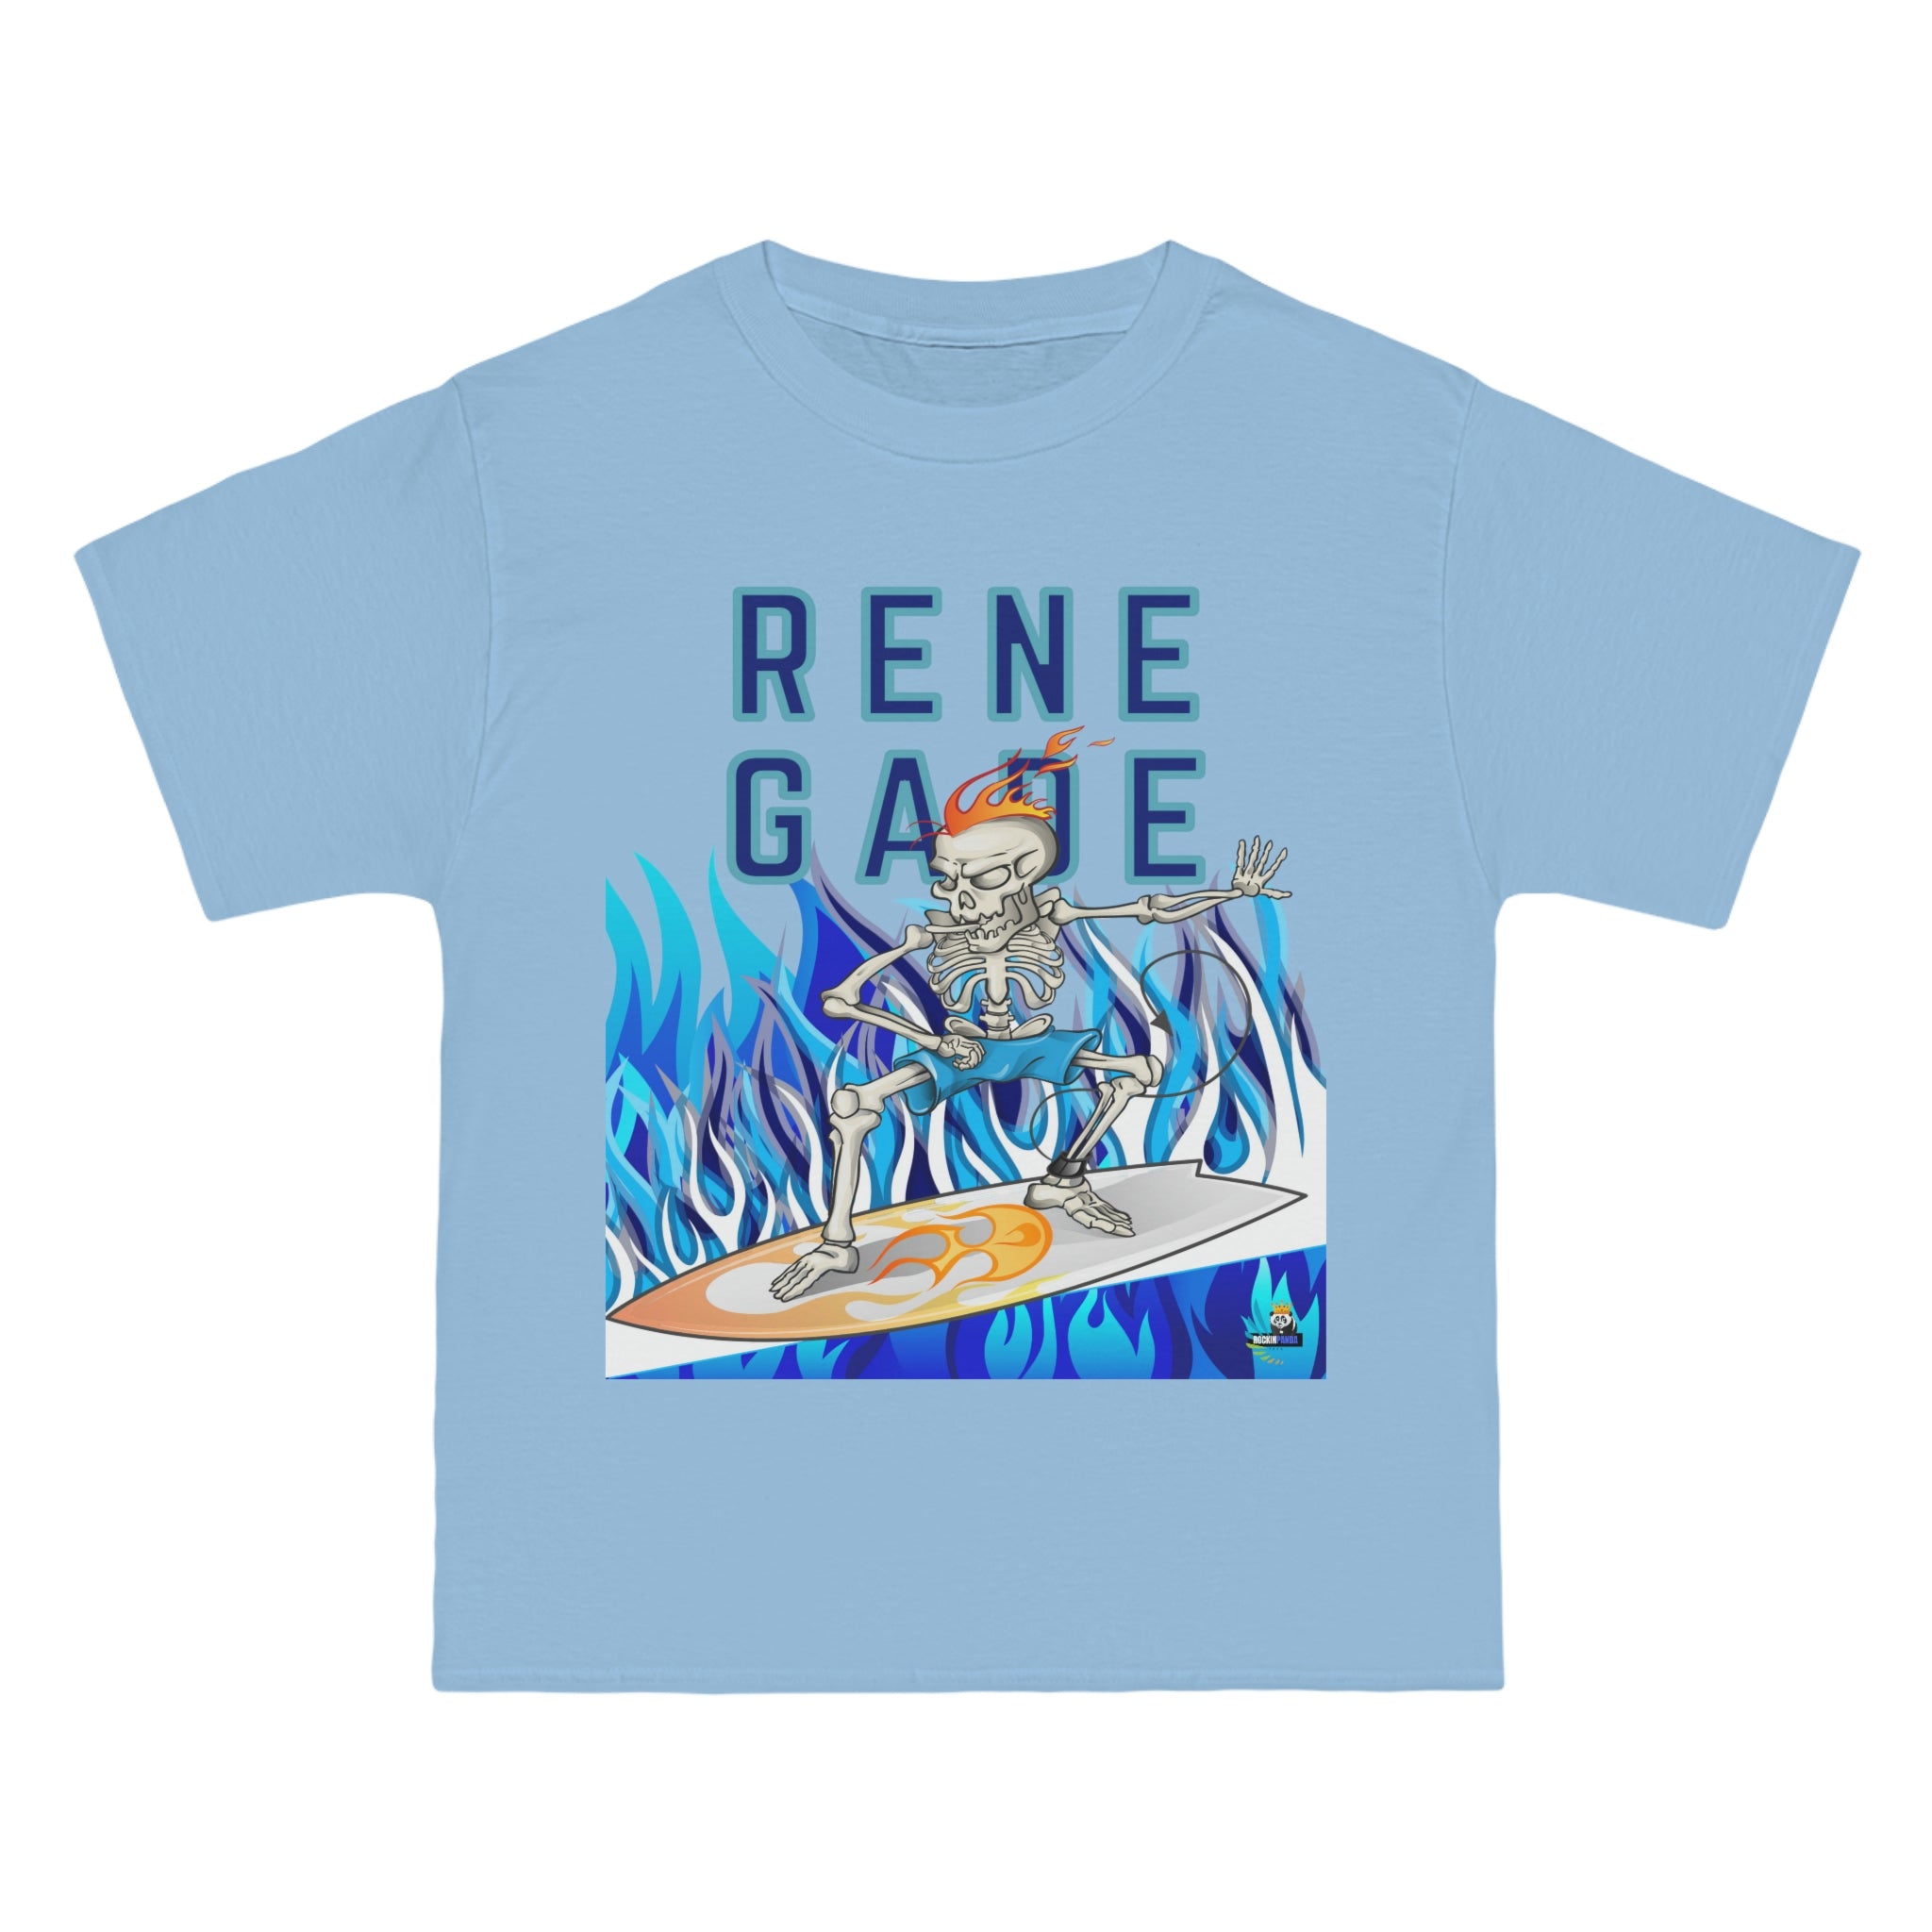 Camiseta pesada Renegade Skeleton Surfer Blue Flame Edition